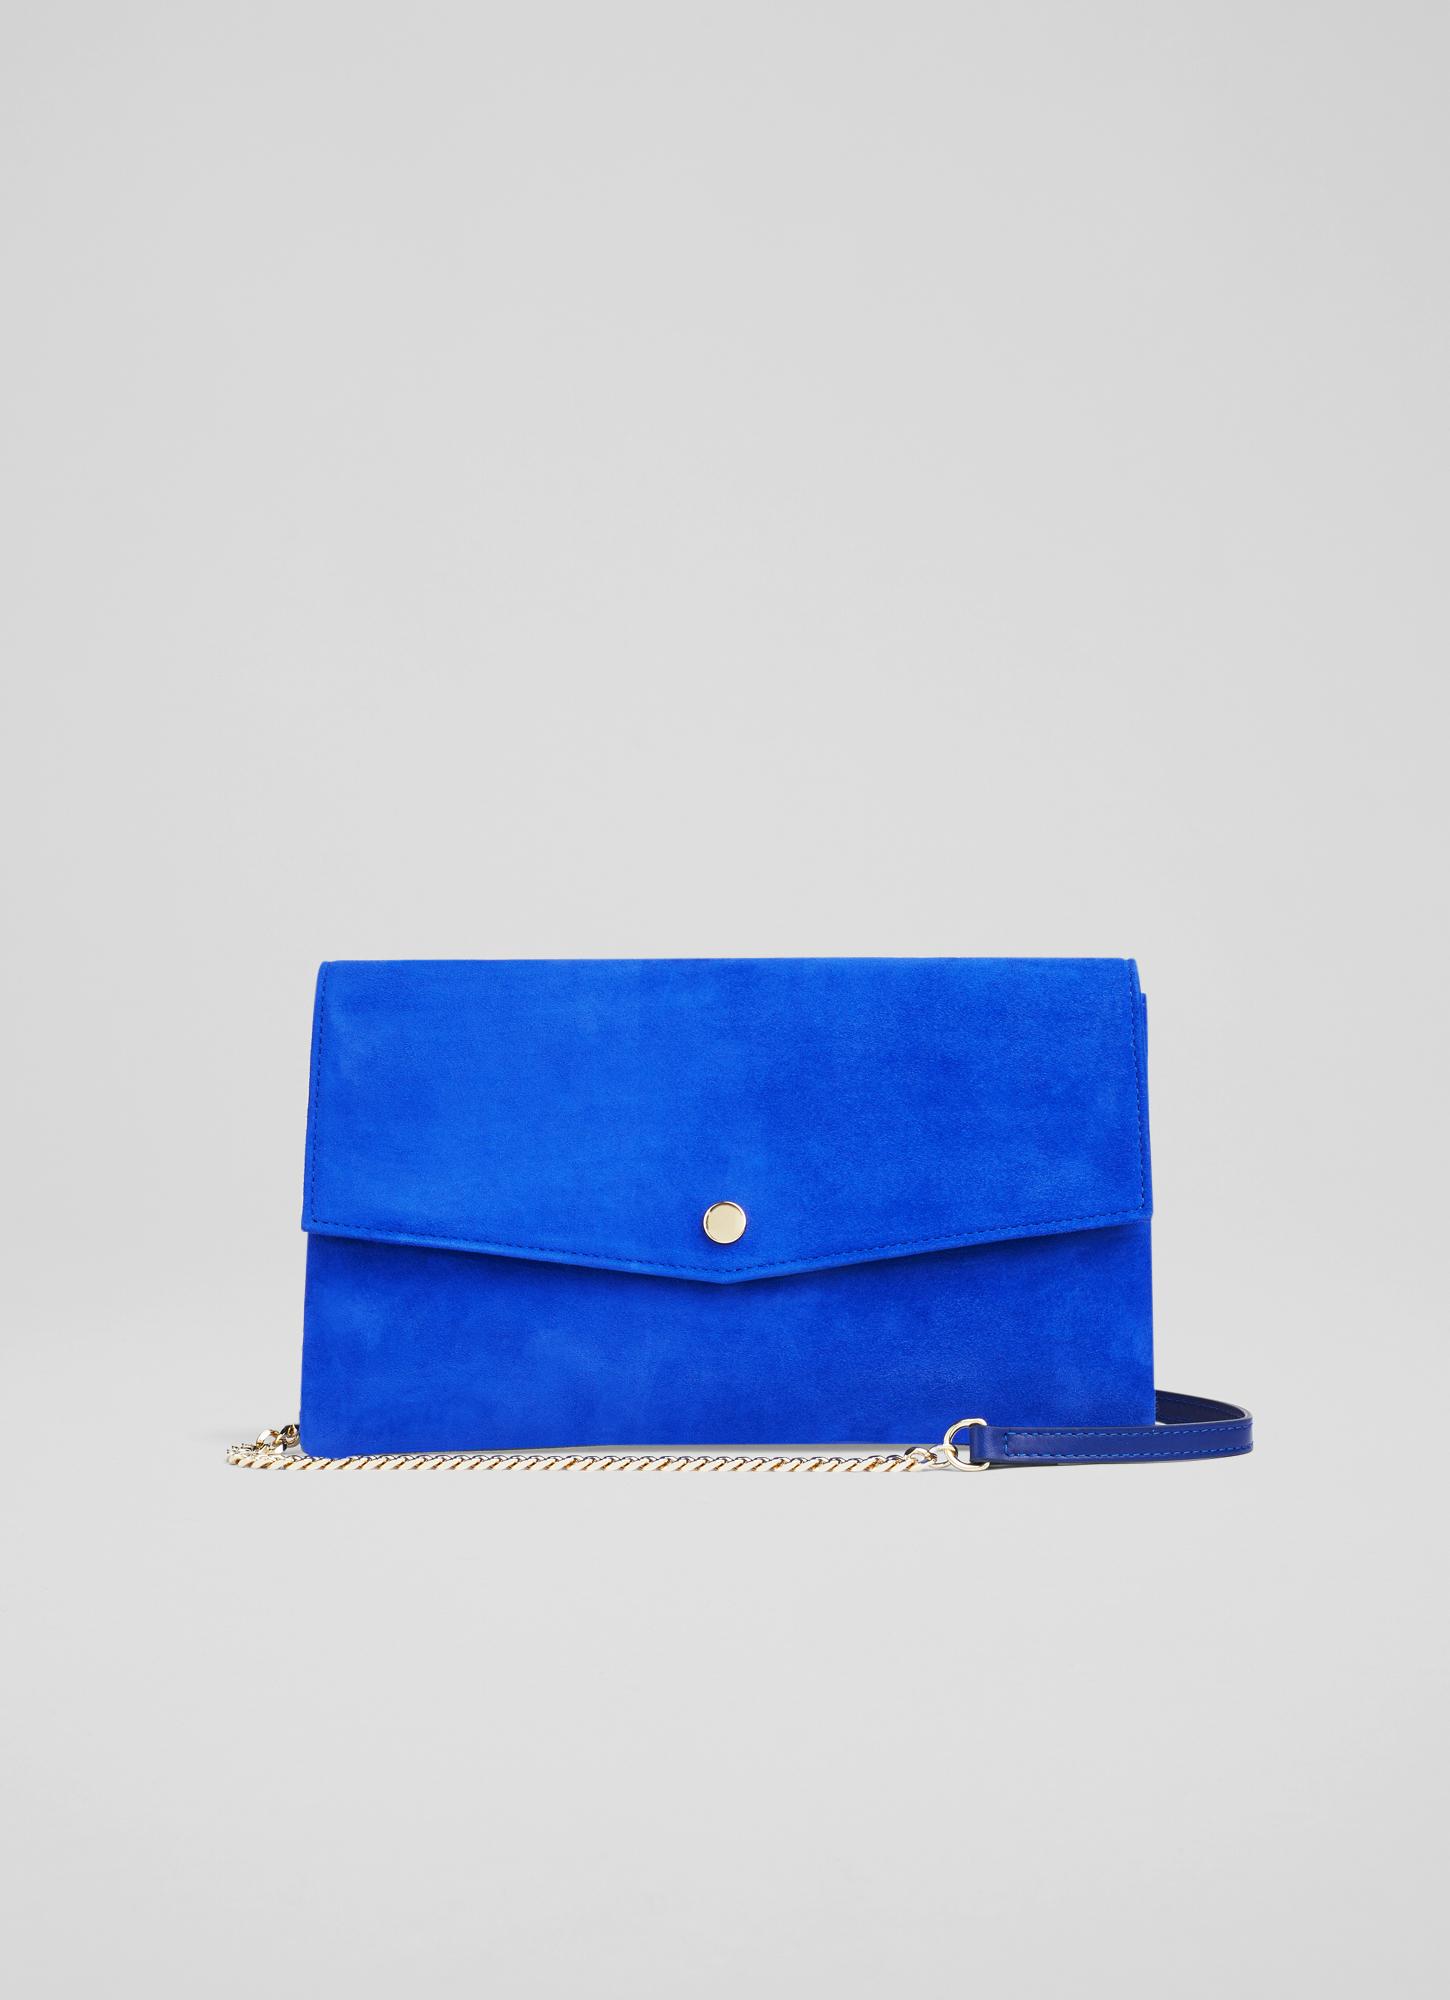 Blue suede, women's bag, uncommon bag, handmade bag, ear wires, retro  bag, retro vintage bag, handbag purse, decorative beagle | Bags, Suede purse,  Unique bags